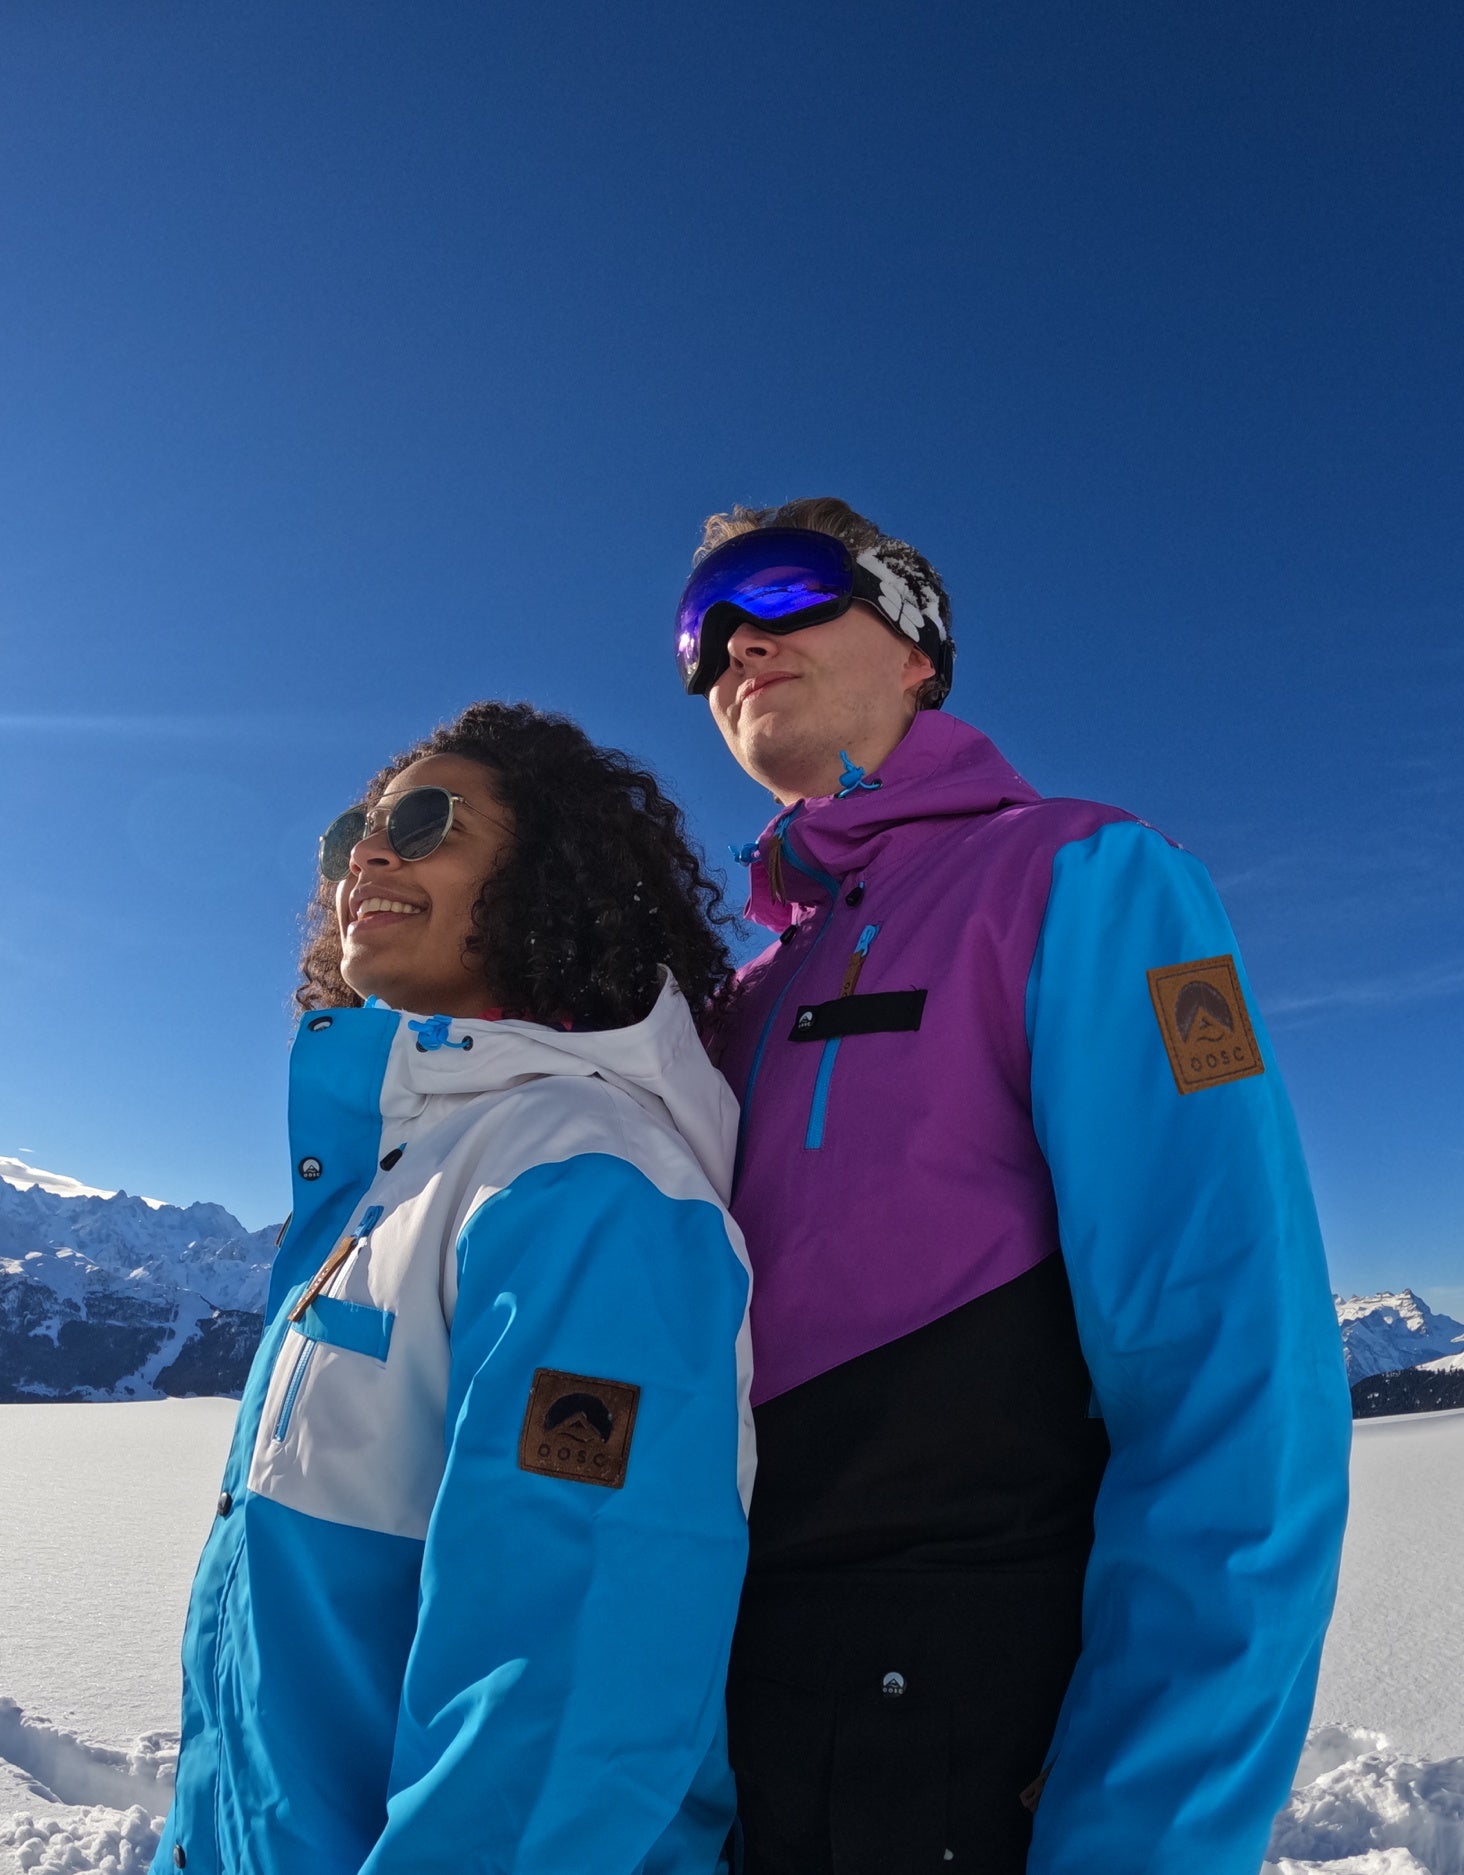 Ski Suits | Retro-Styled, Sustainable Ski Wear – OOSC